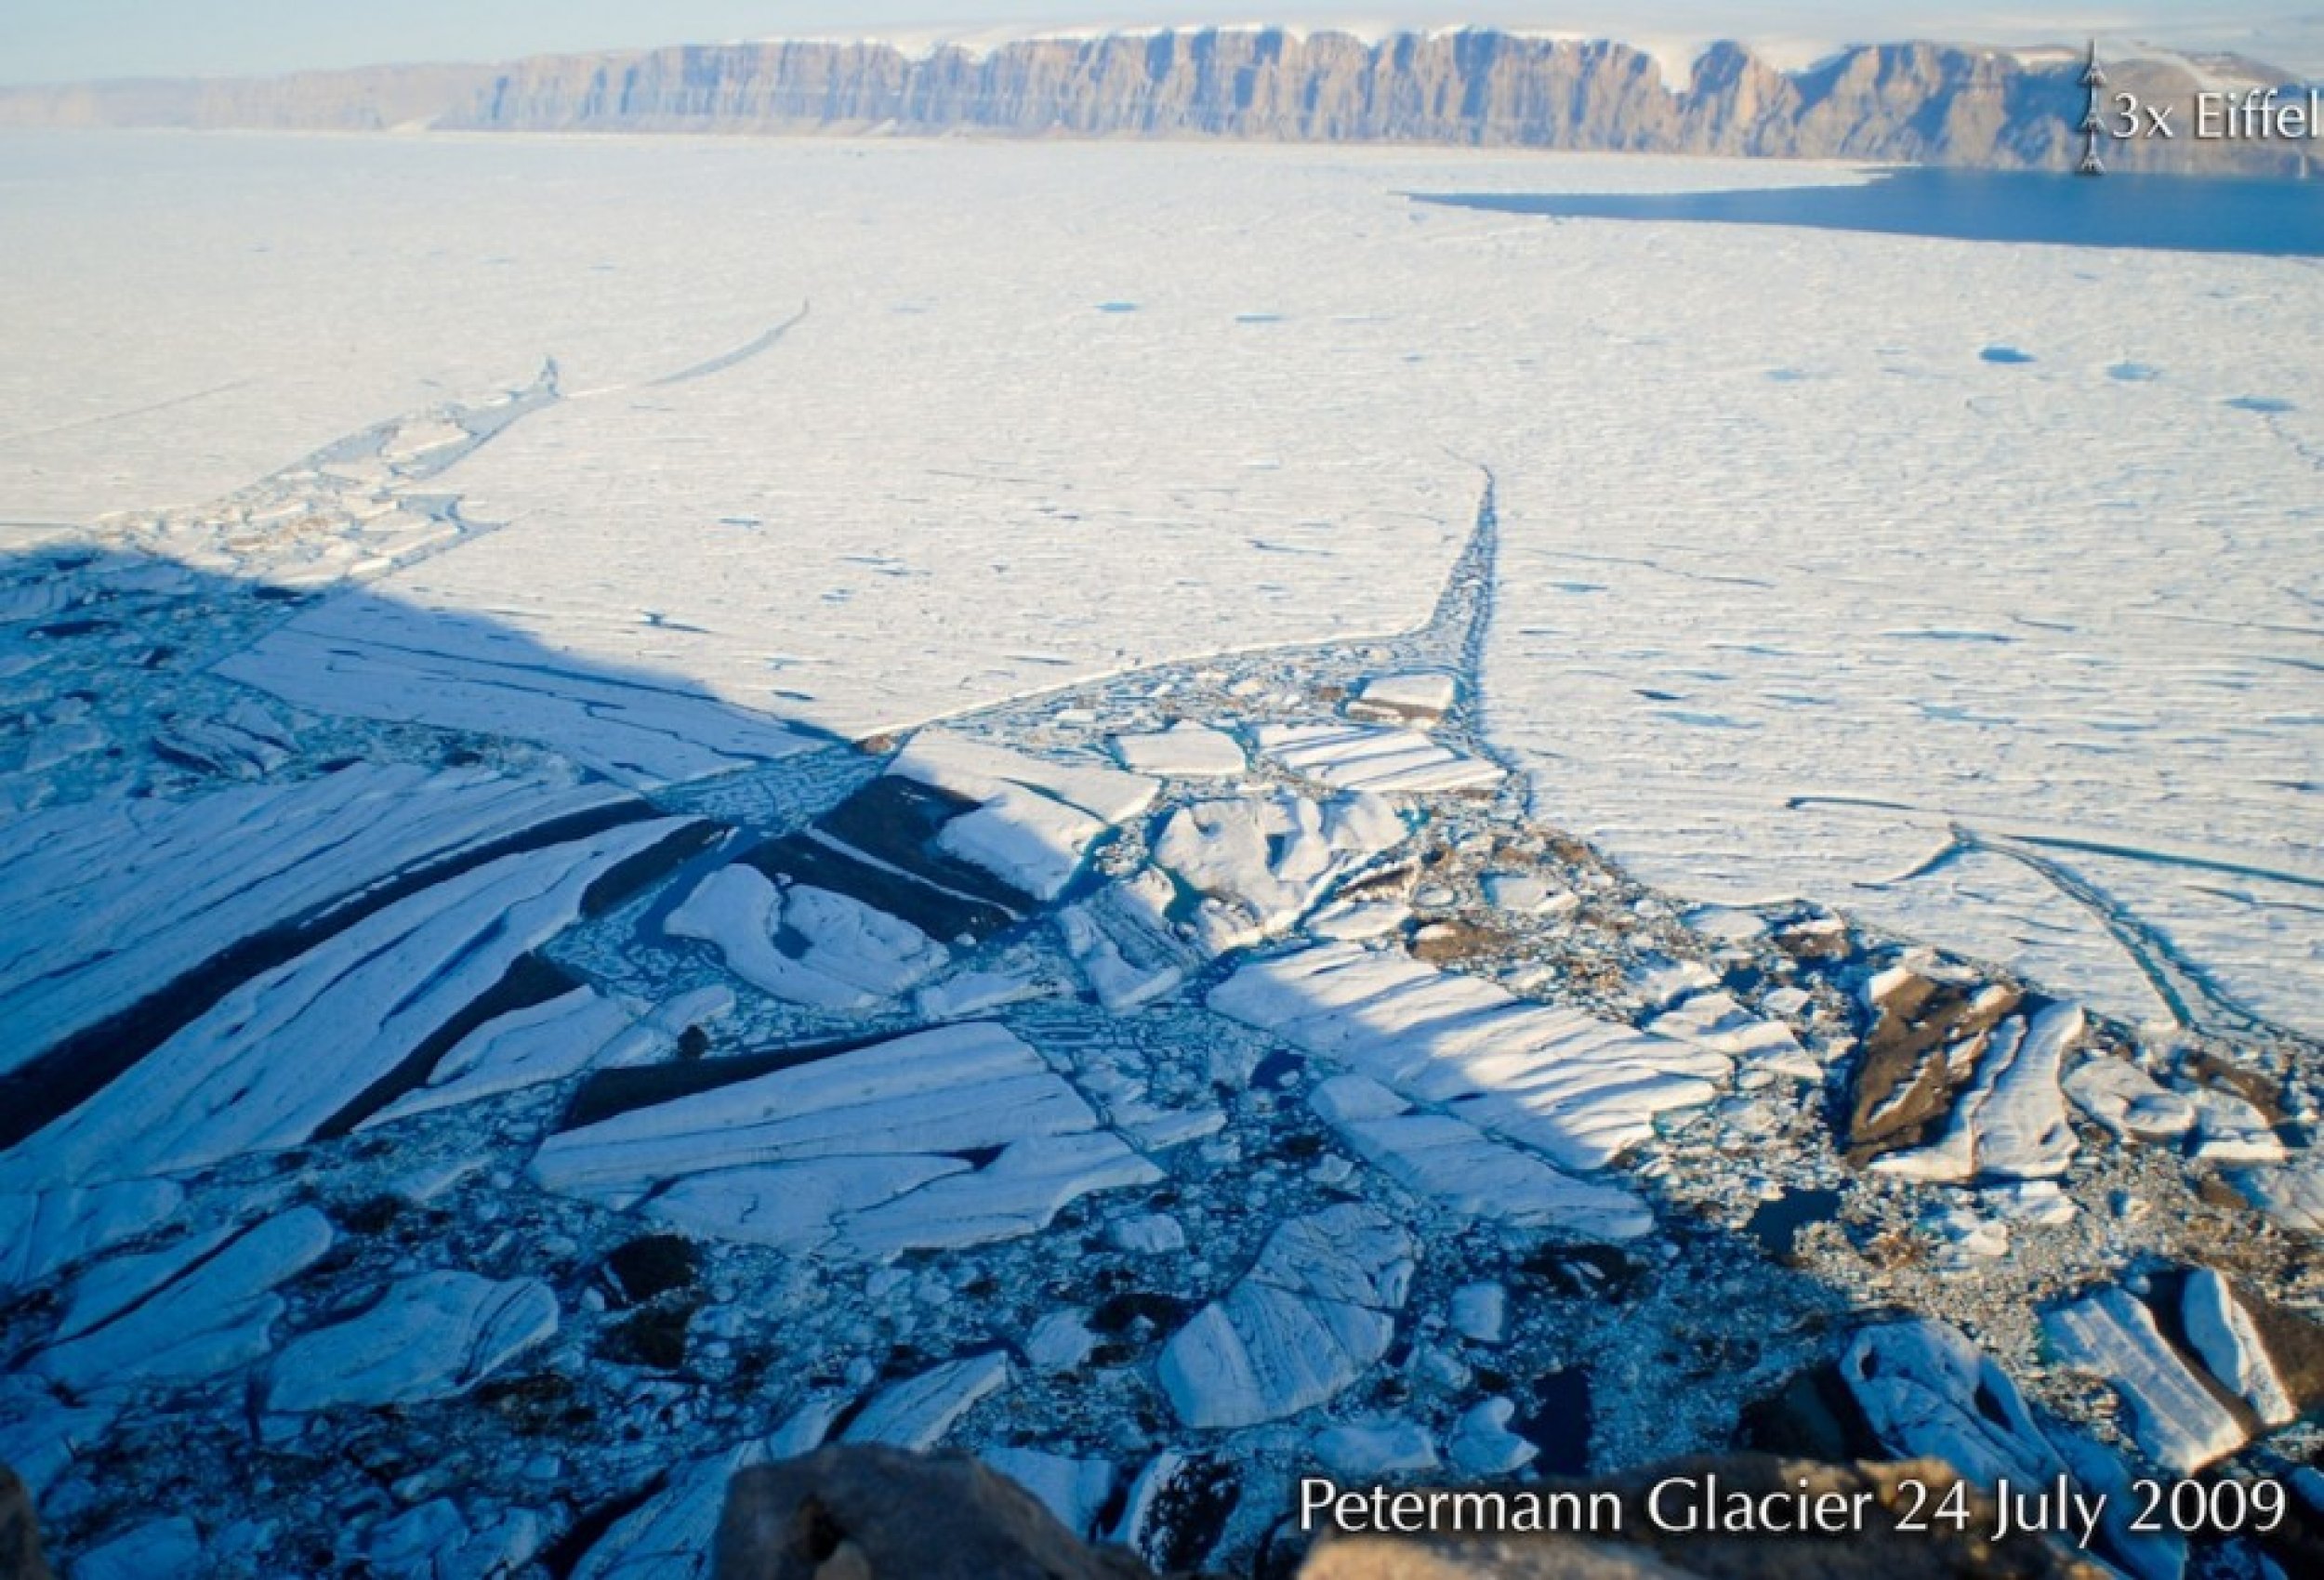 Greenlands Petermann Glacier 